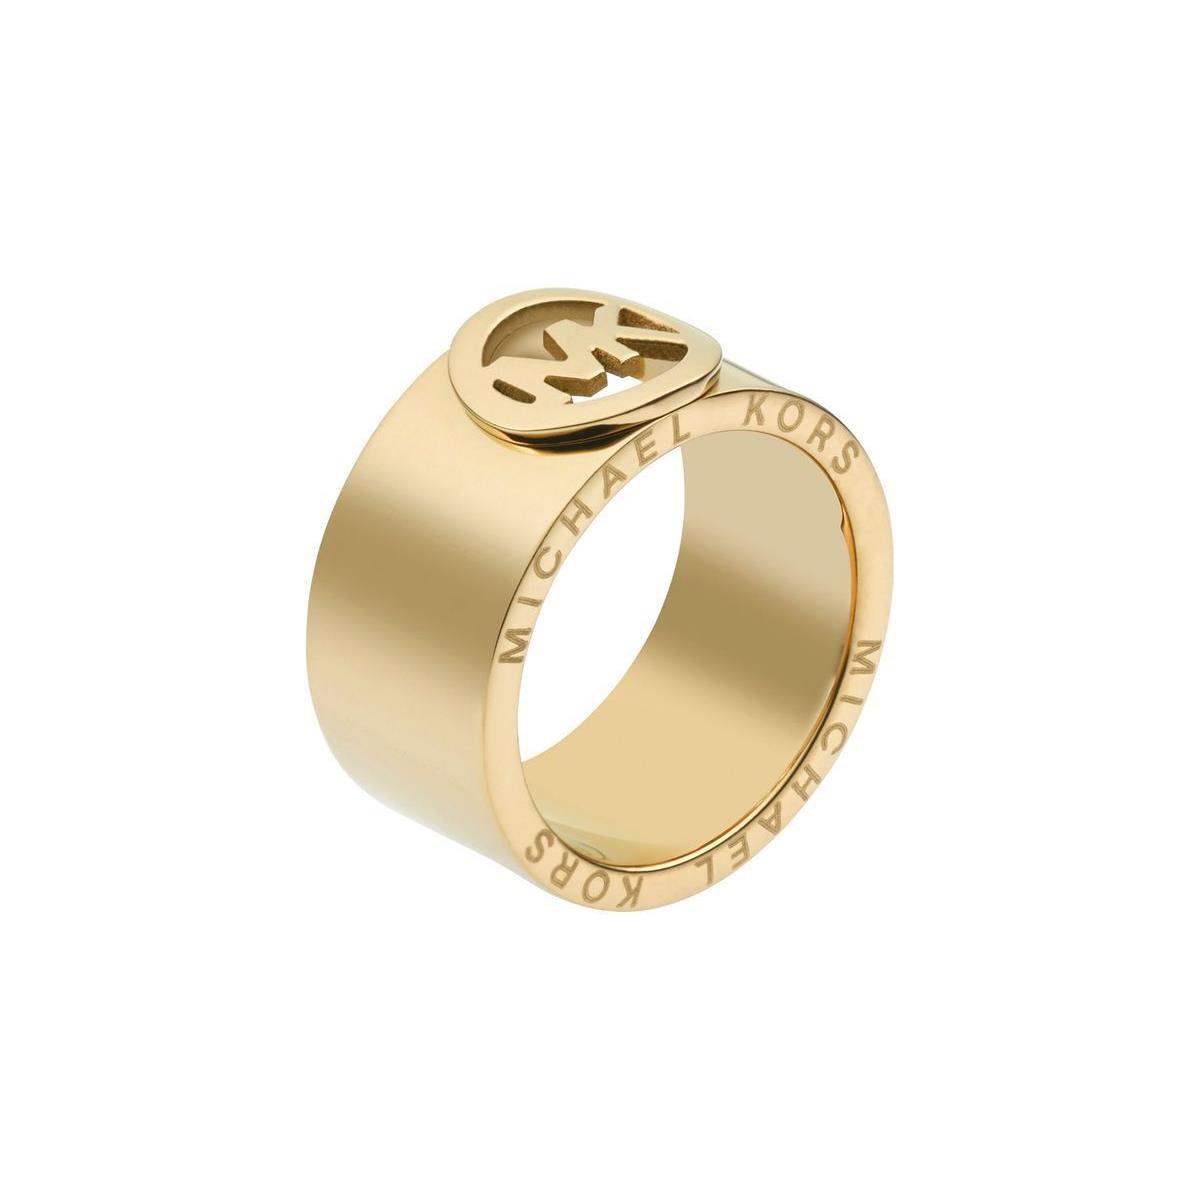 Michael Kors Fulton Gold Tone Logo Stainless Steel Ring Size: 6 7